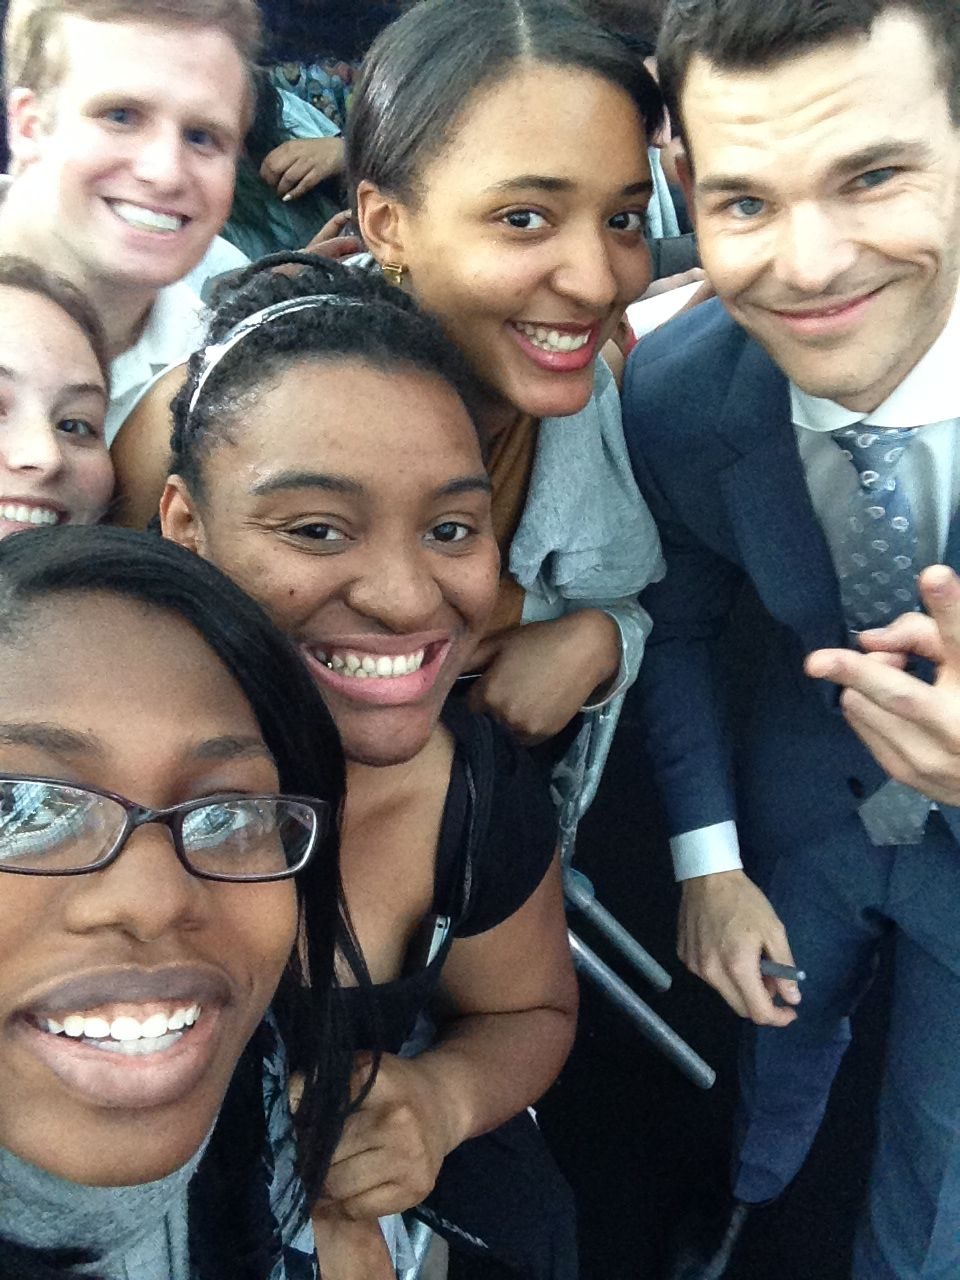 Cute Selfie Of Nicholas Hoult With Fans